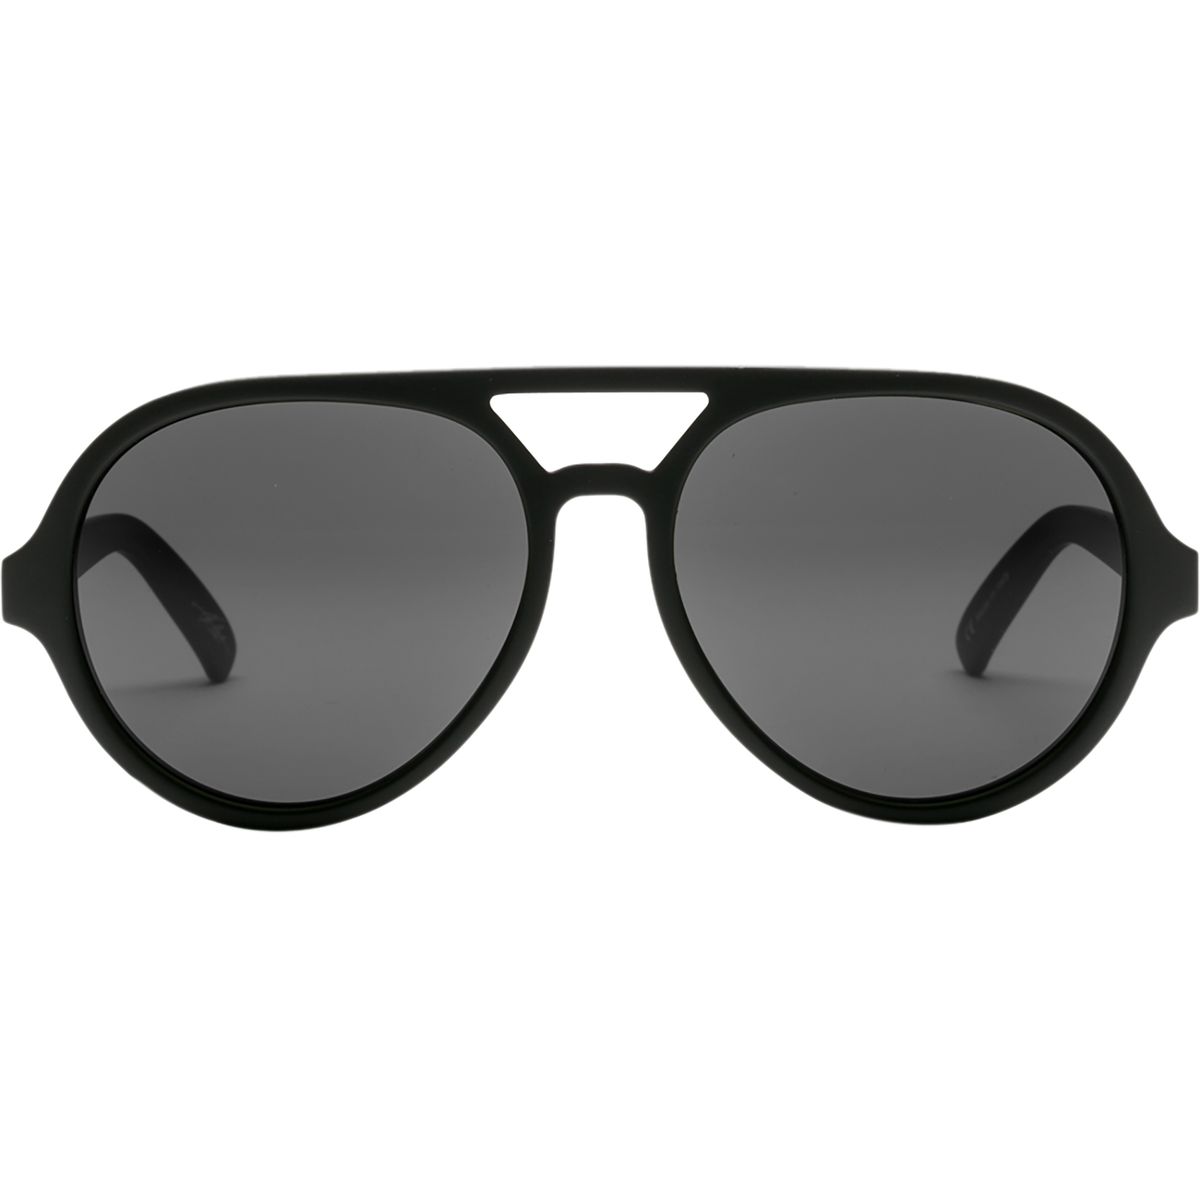 Electric Scrambler Sunglasses - Men's - Accessories